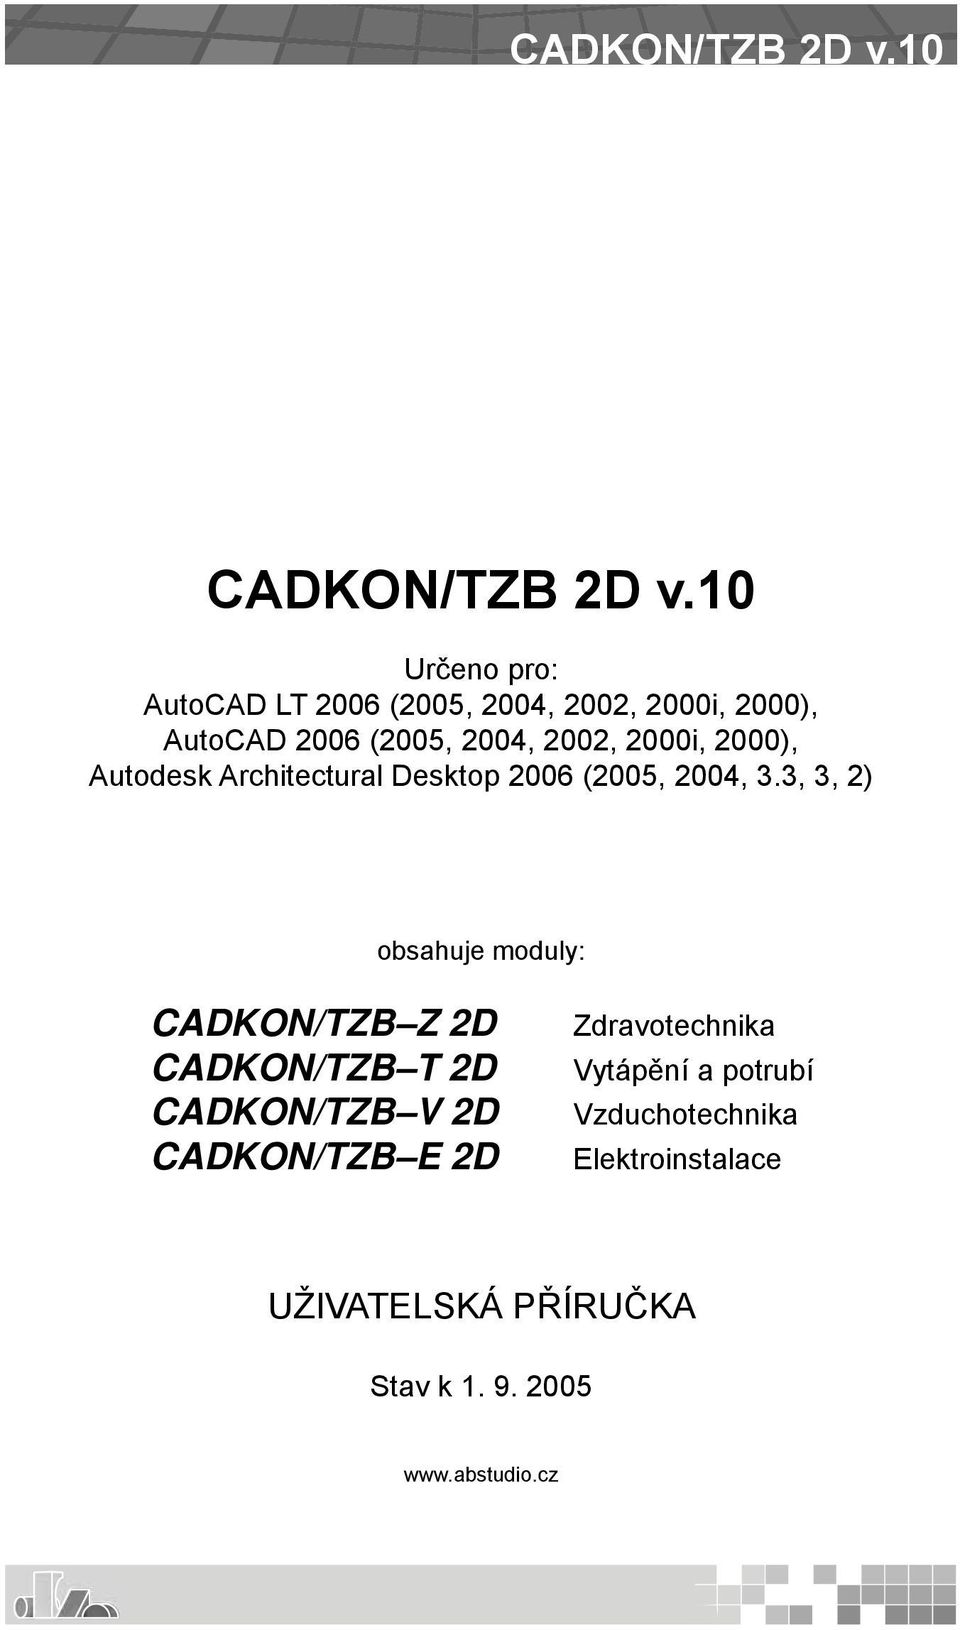 2000i, 2000), Autodesk Architectural Desktop 2006 (2005, 2004, 3.